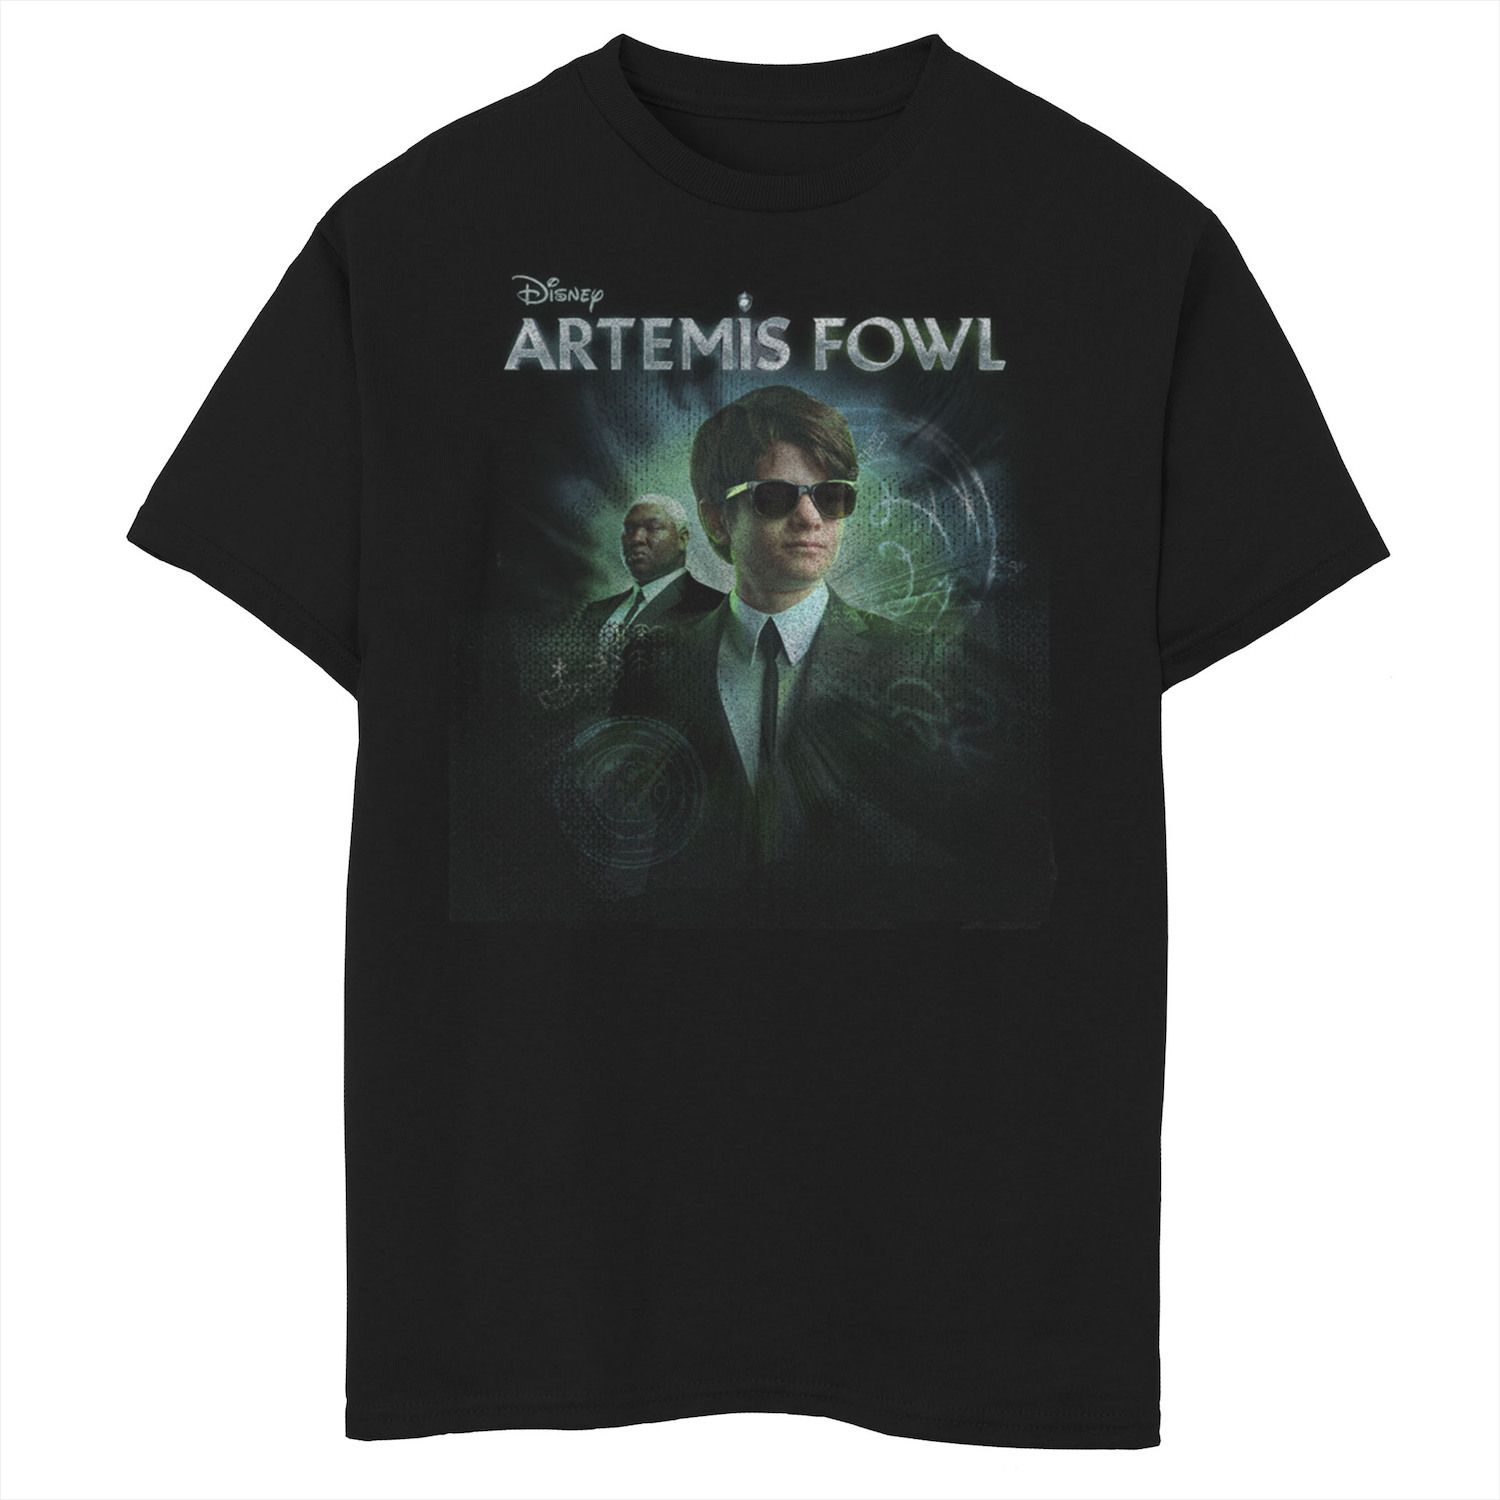 Artemis Fowl - Movies on Google Play